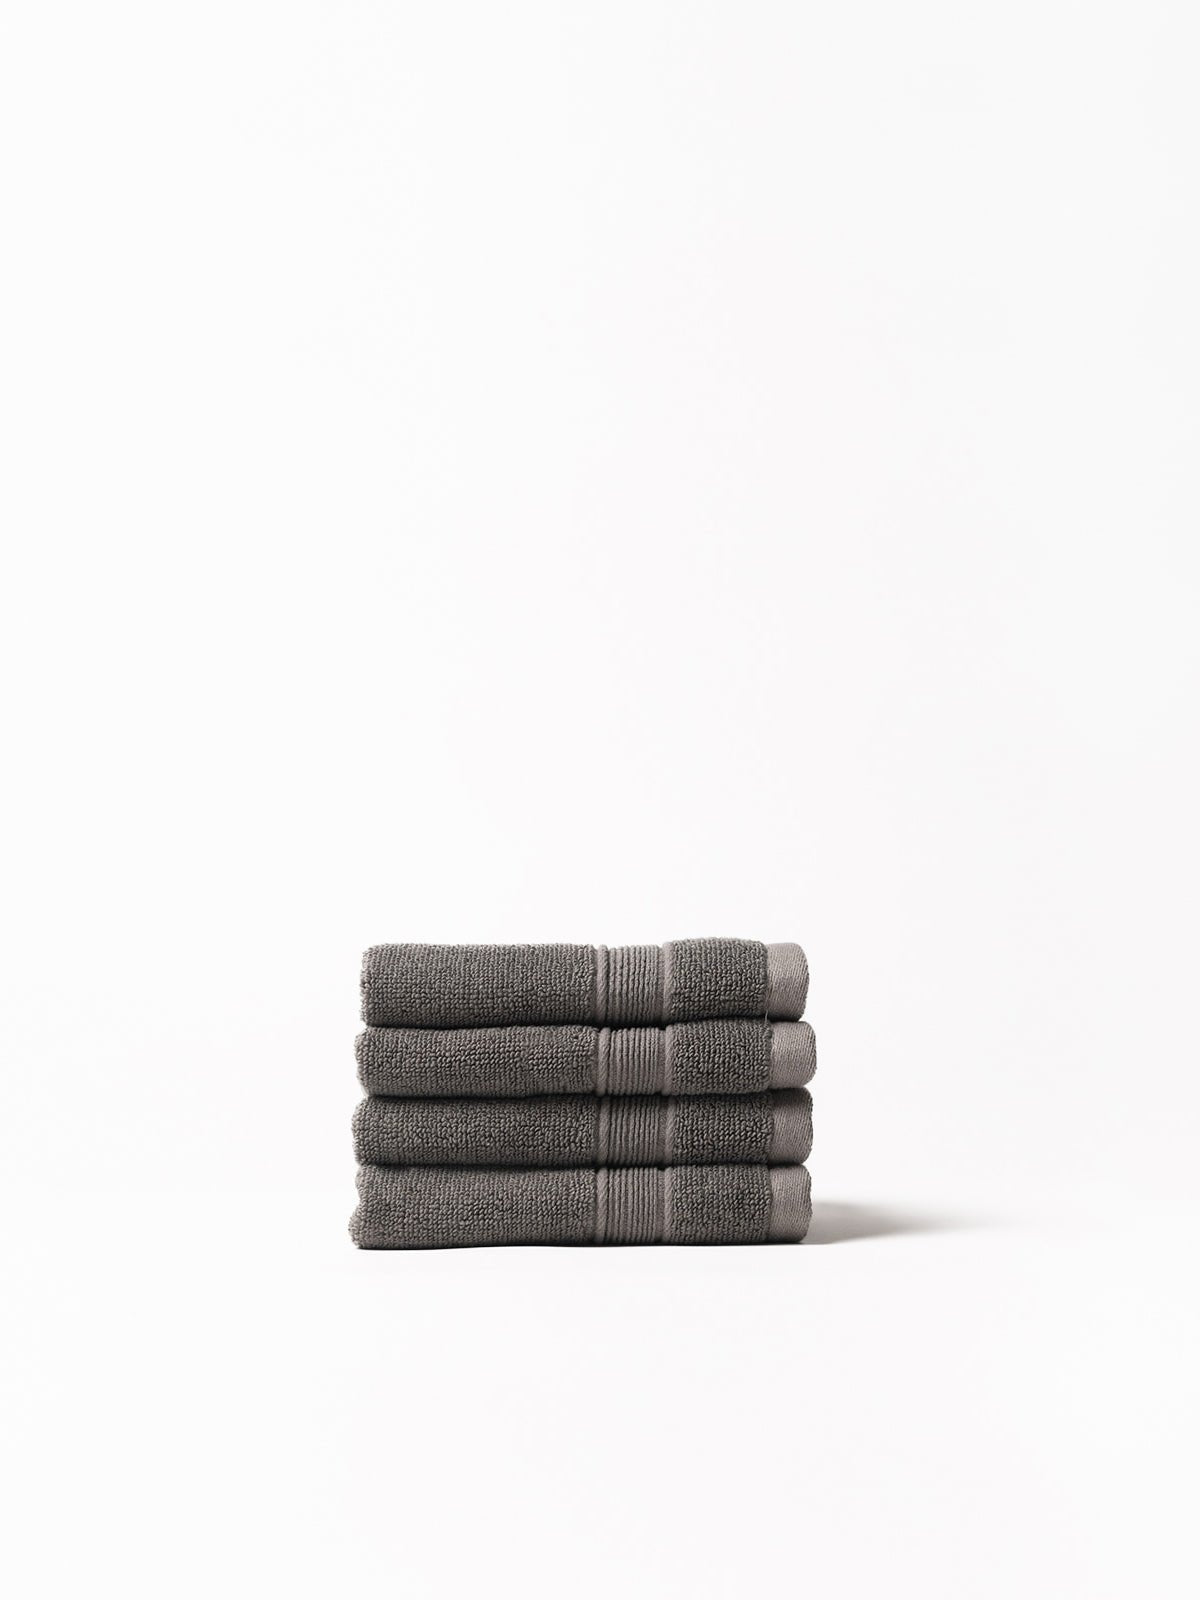 Charcoal washcloths folded with white background 